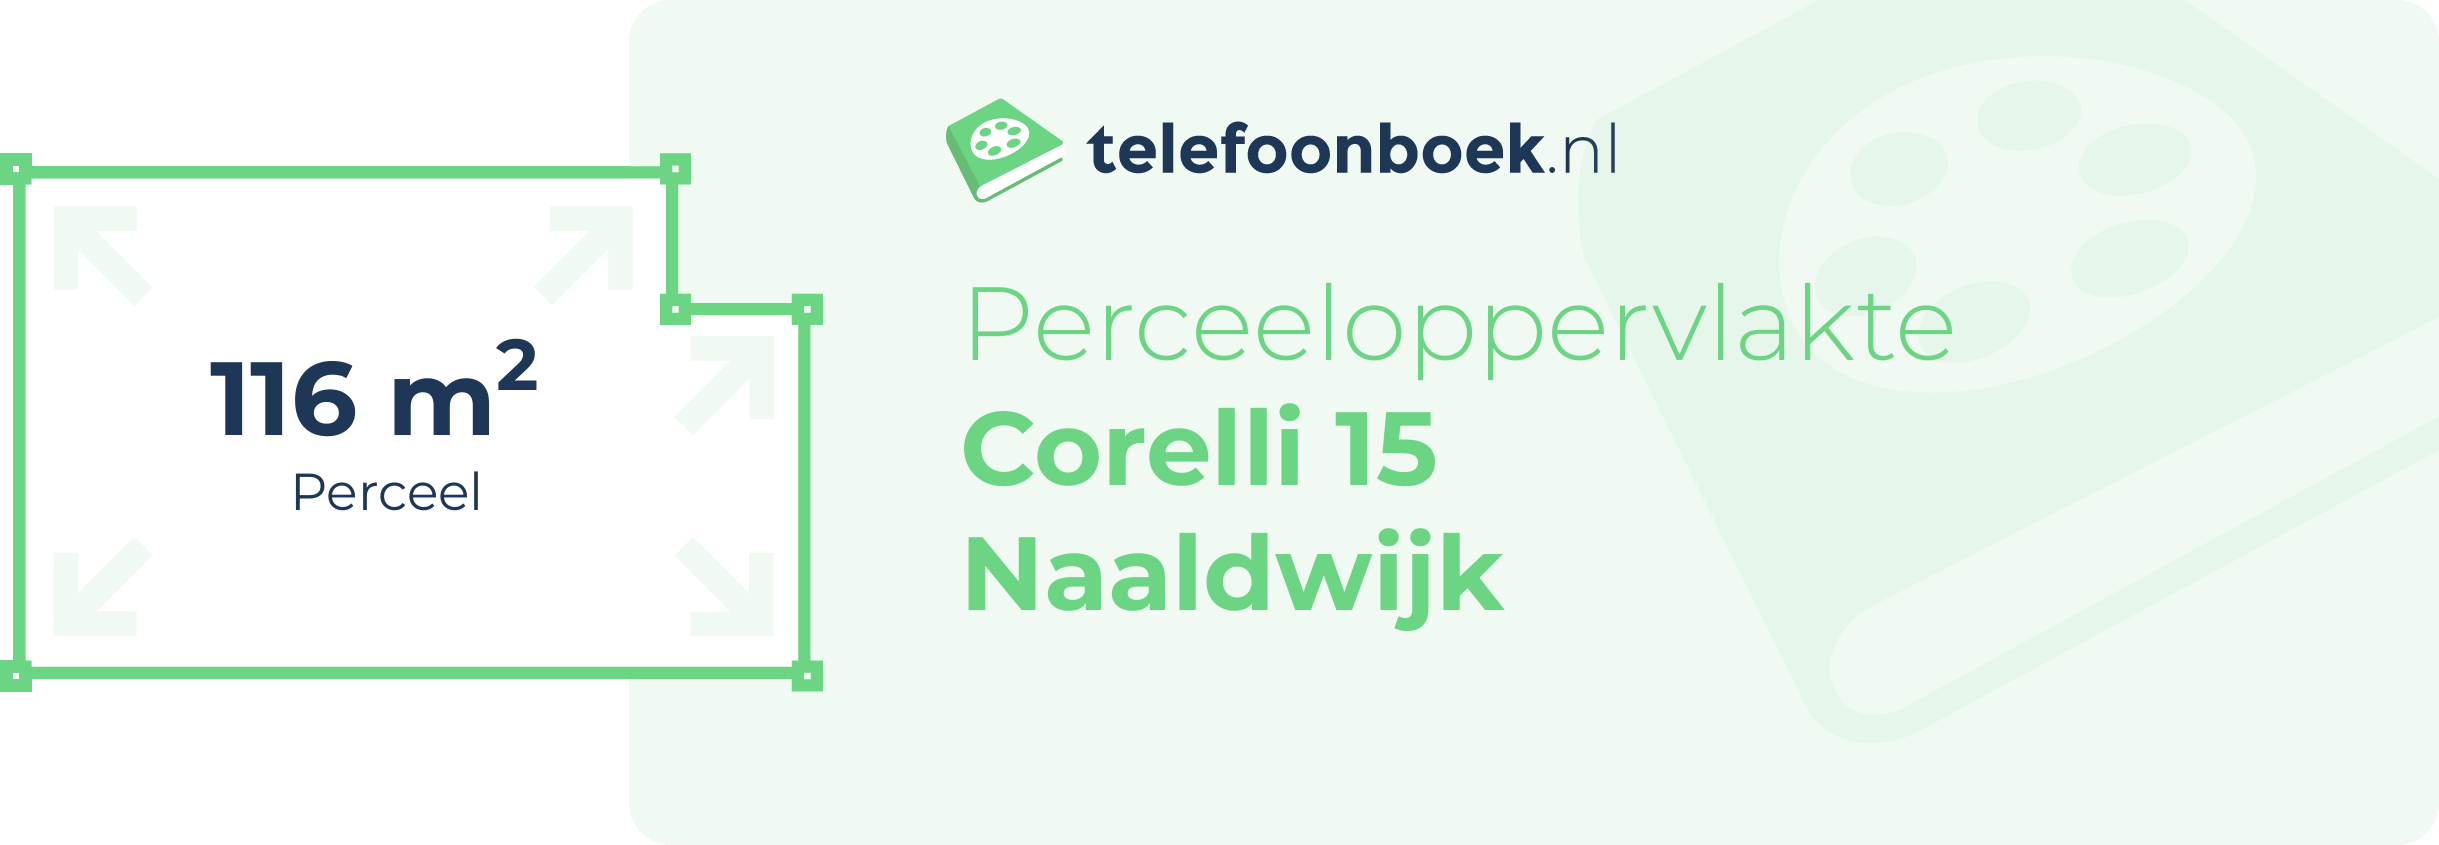 Perceeloppervlakte Corelli 15 Naaldwijk